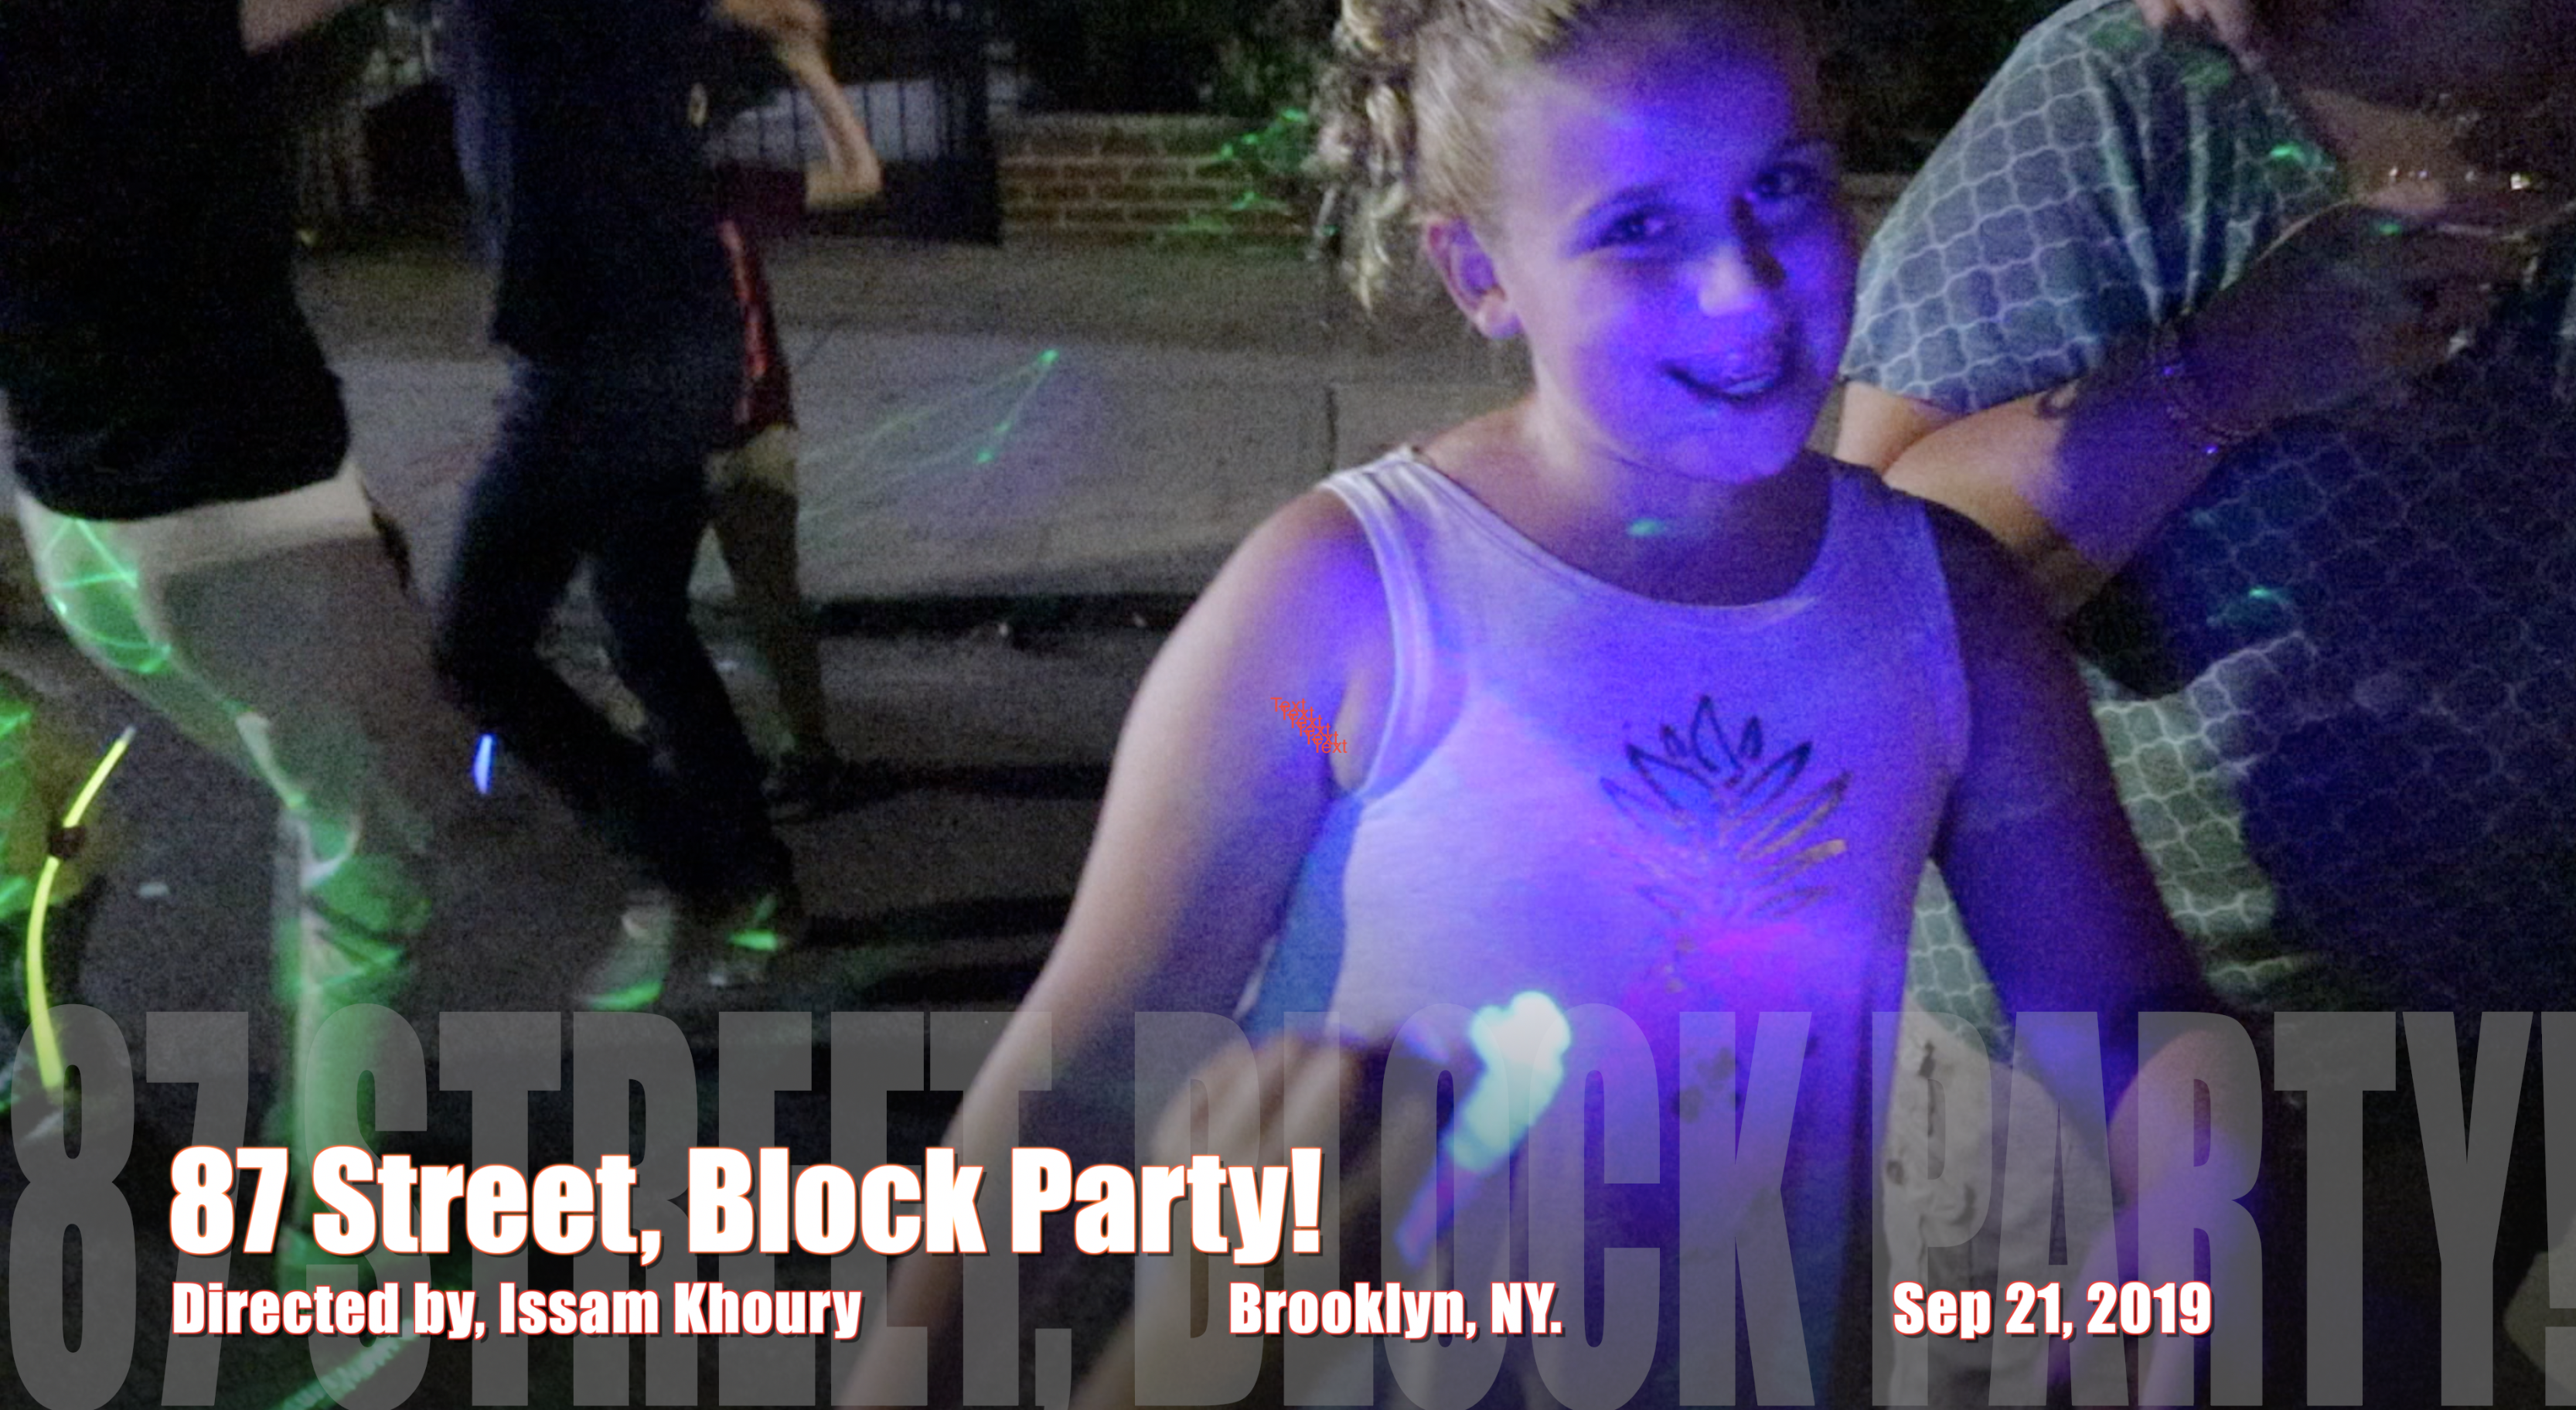 87 St, Block party!